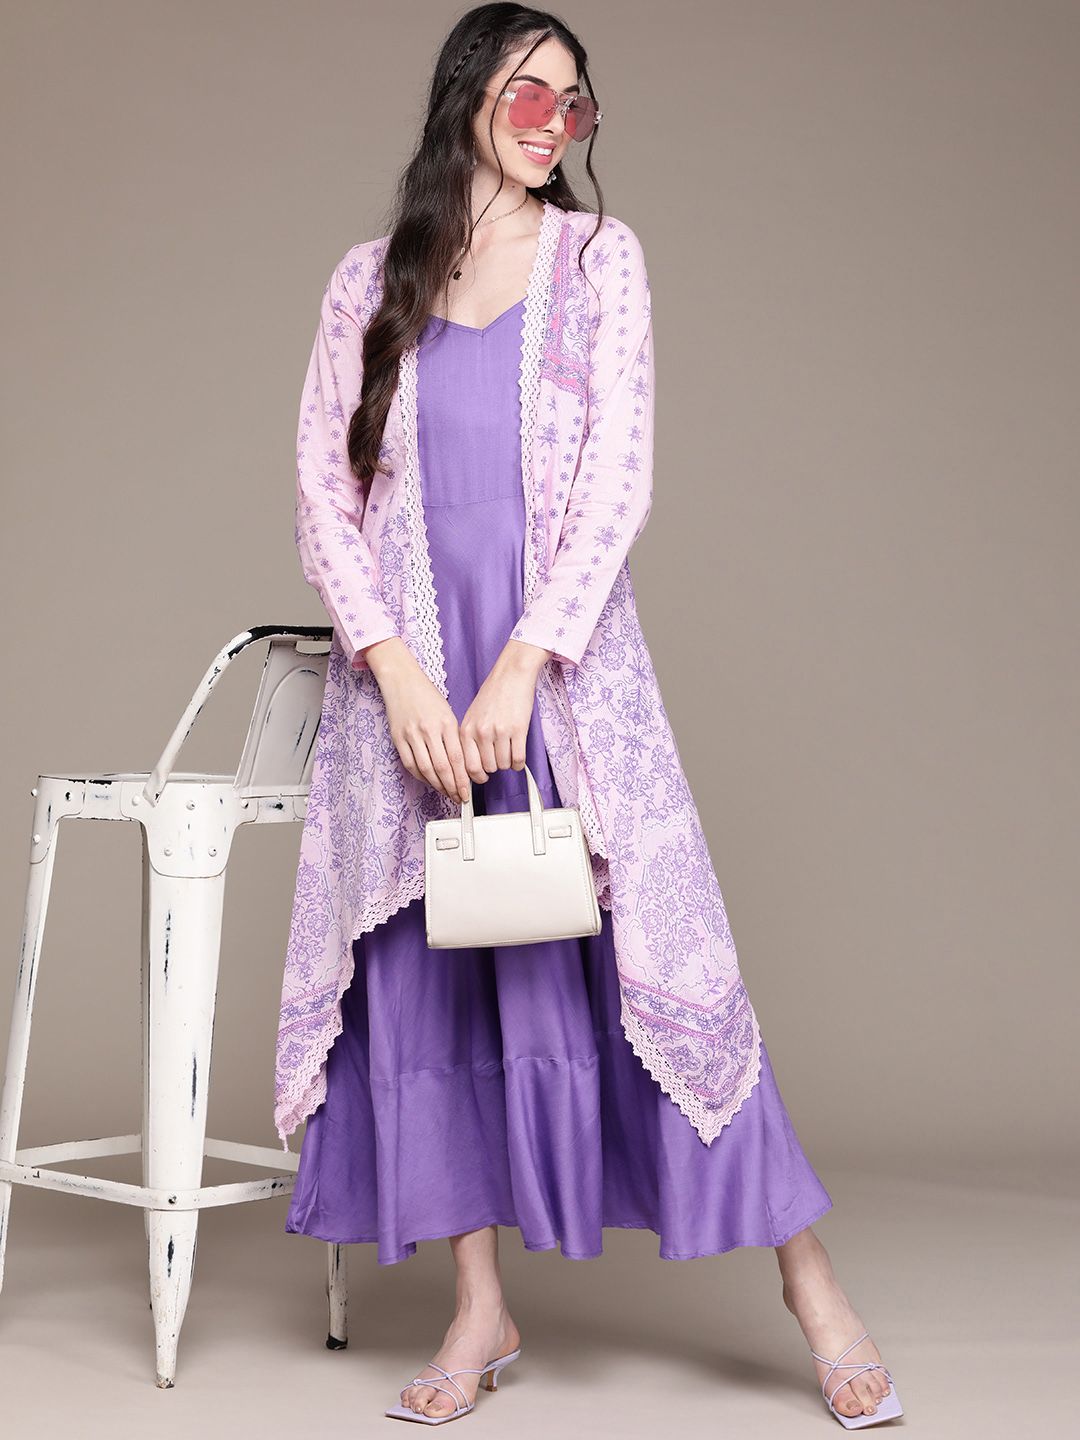 aarke Ritu Kumar Women Purple Maxi Dress Comes with a Cape Price in India